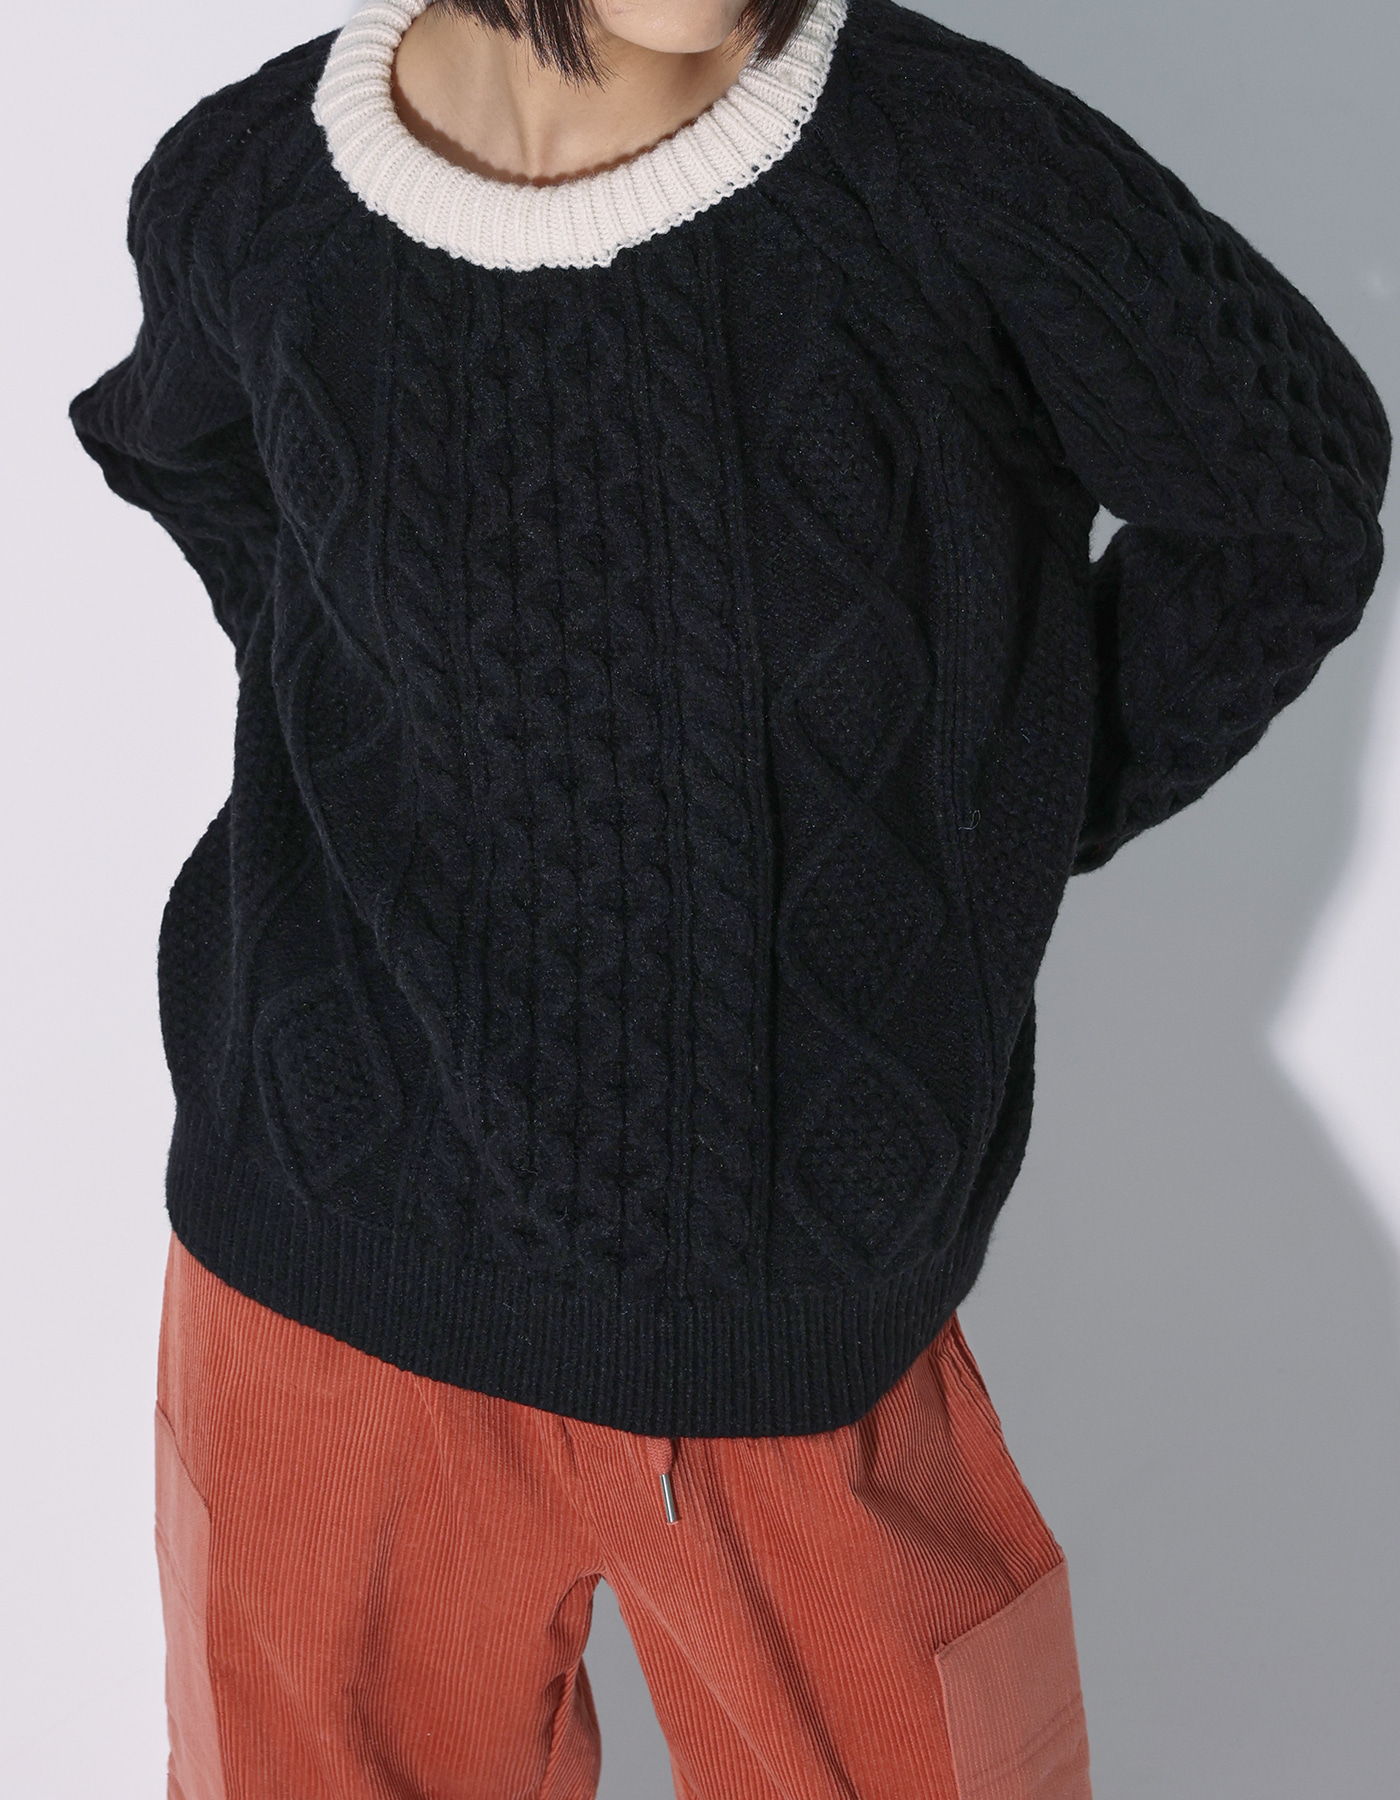 Point neck cable knit (3 Color)